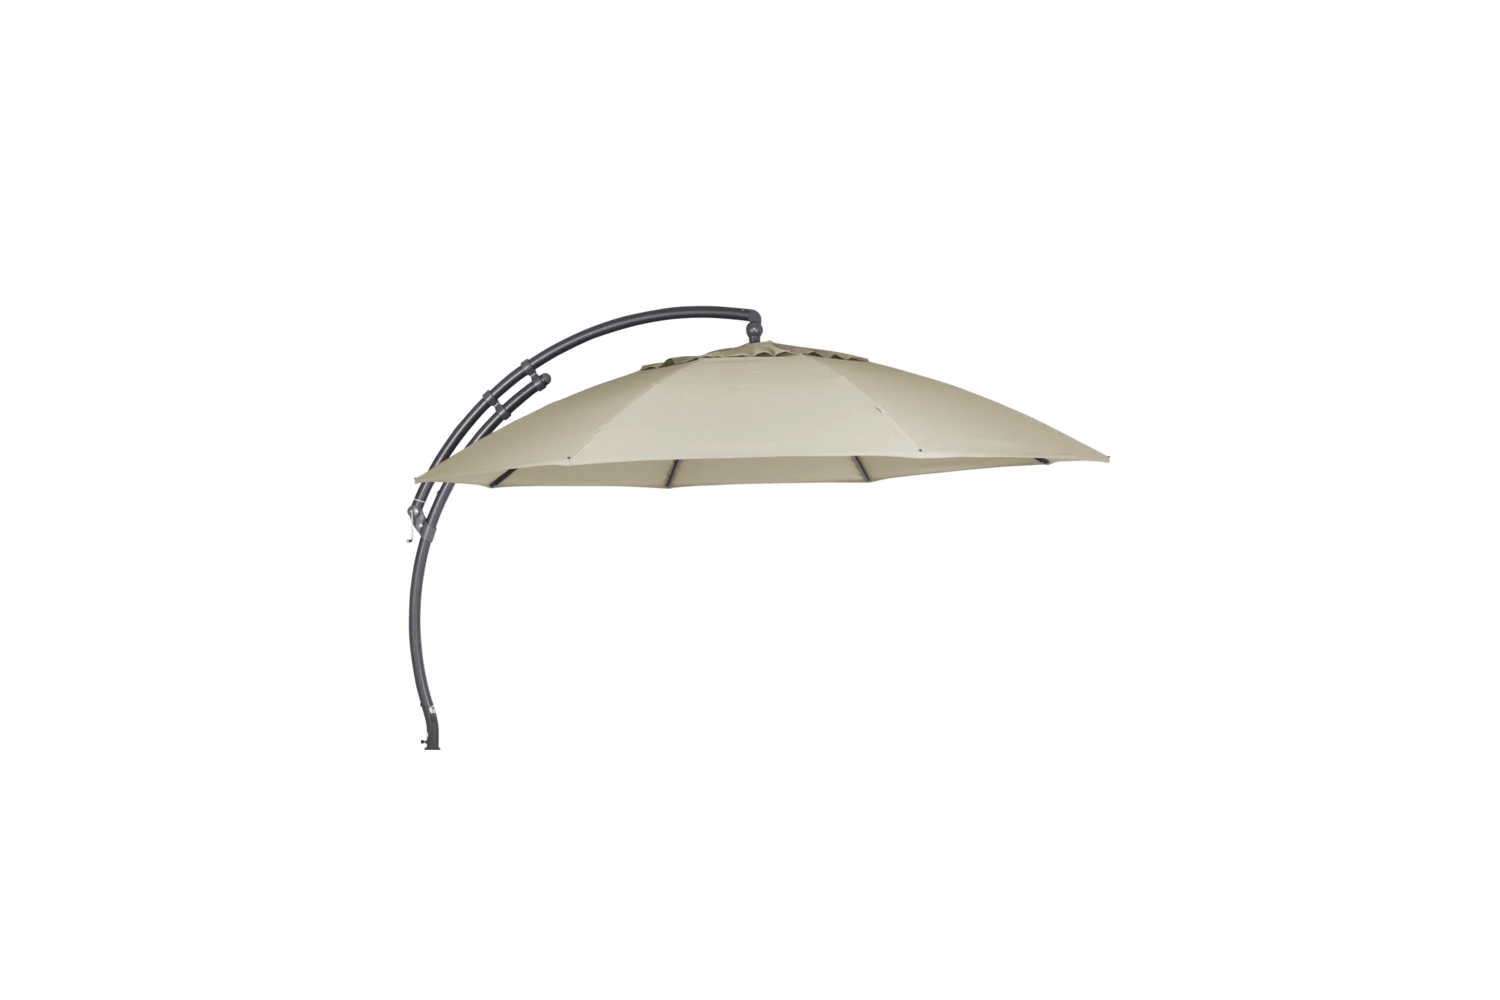 Easy Sun frihängande parasoll beige Brafab